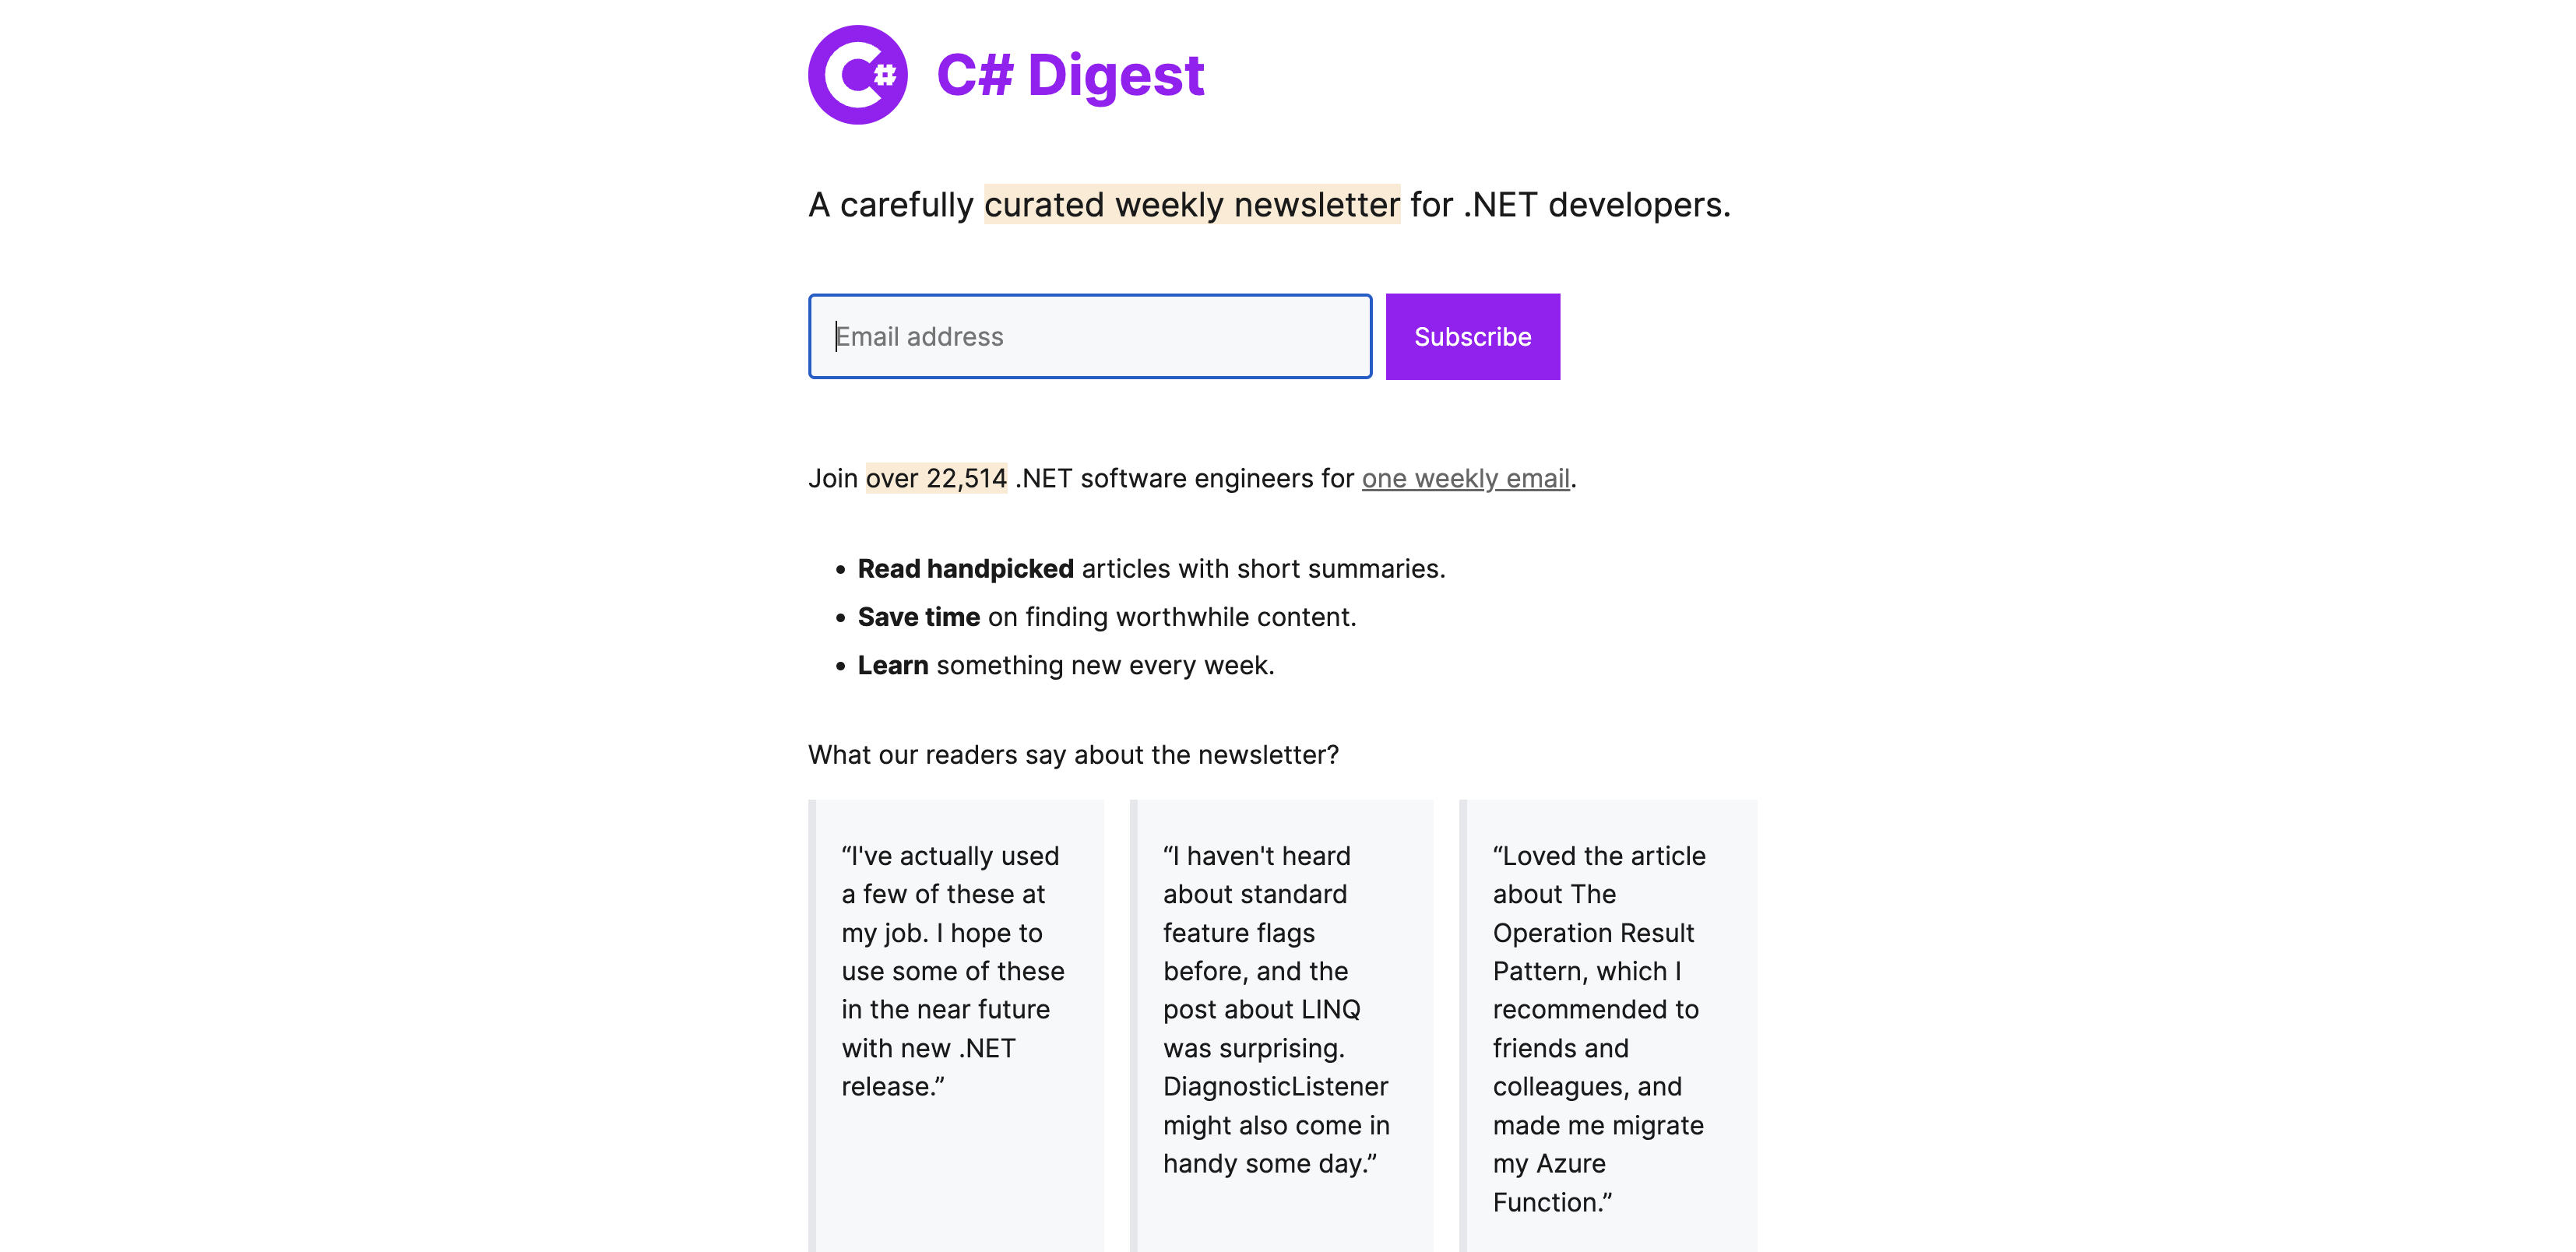 C# Digest News